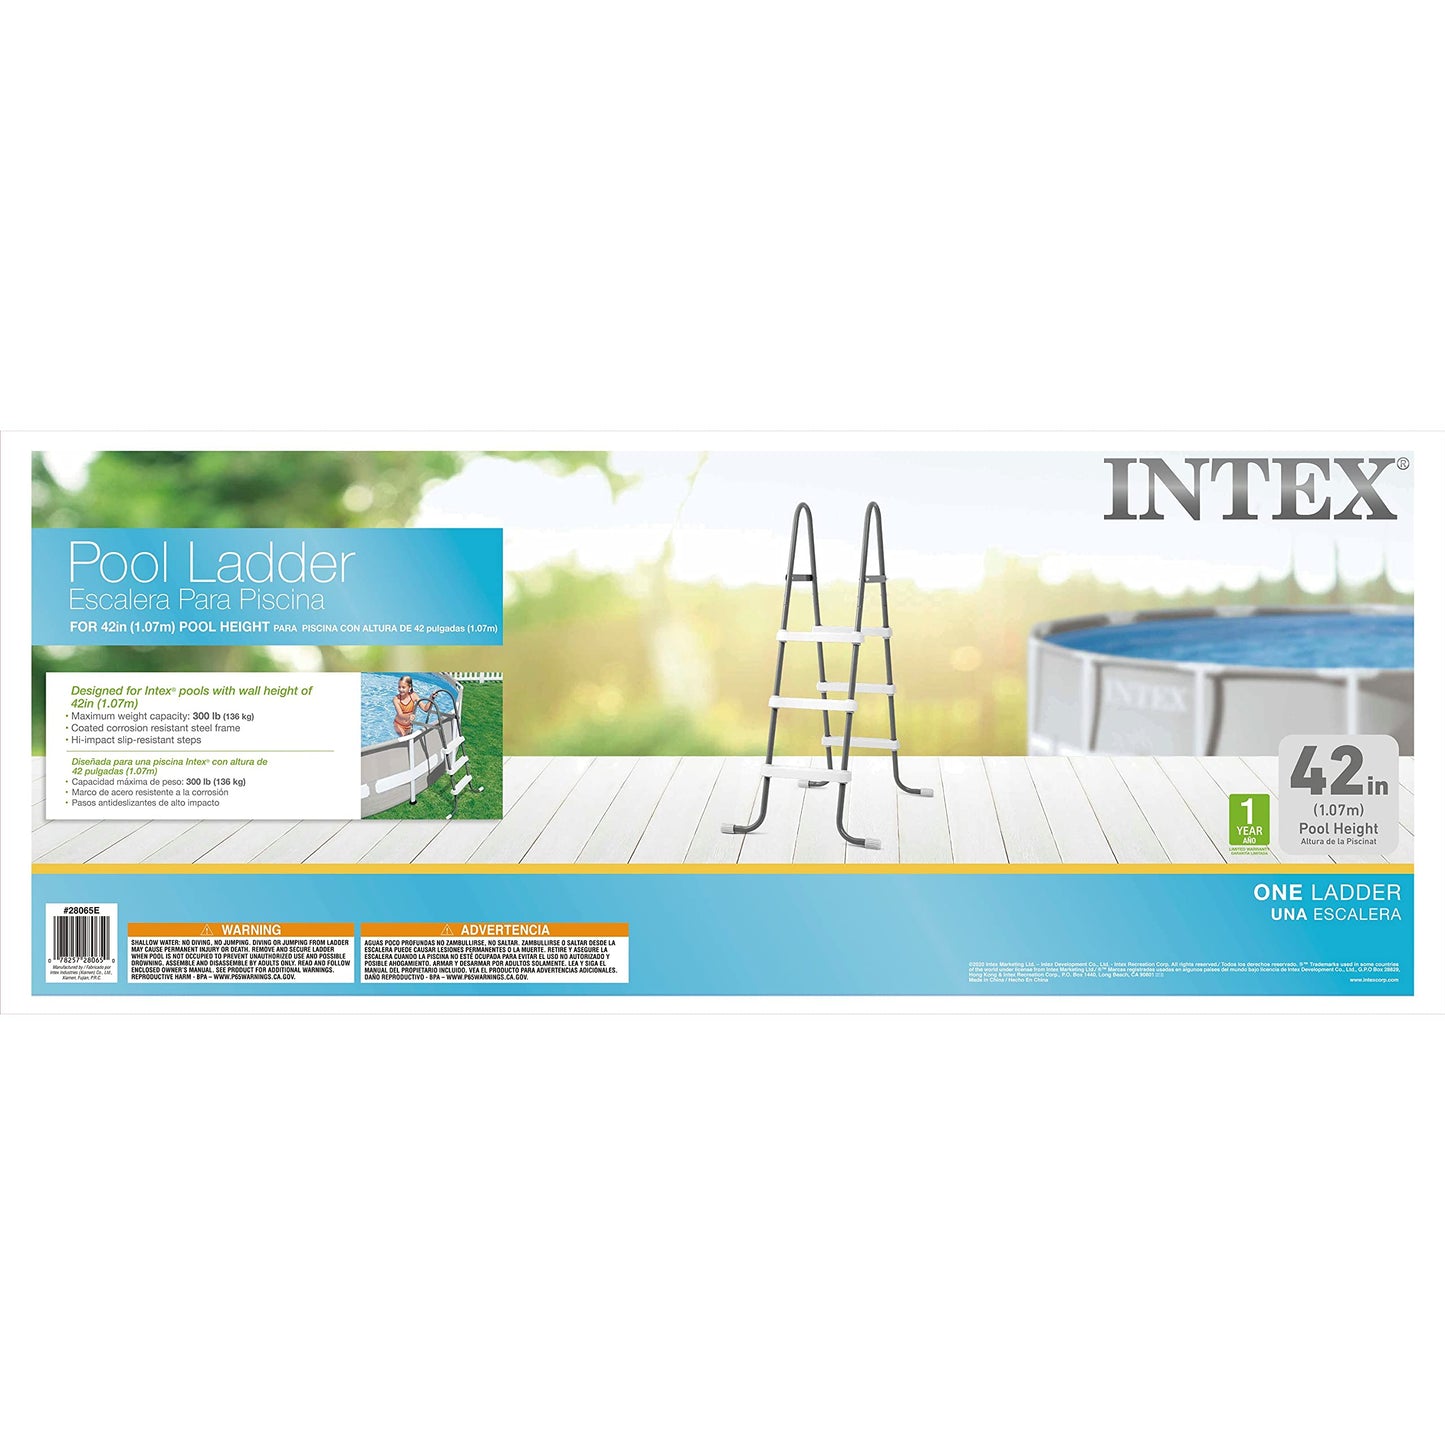 Intex - 42" Pool Ladder